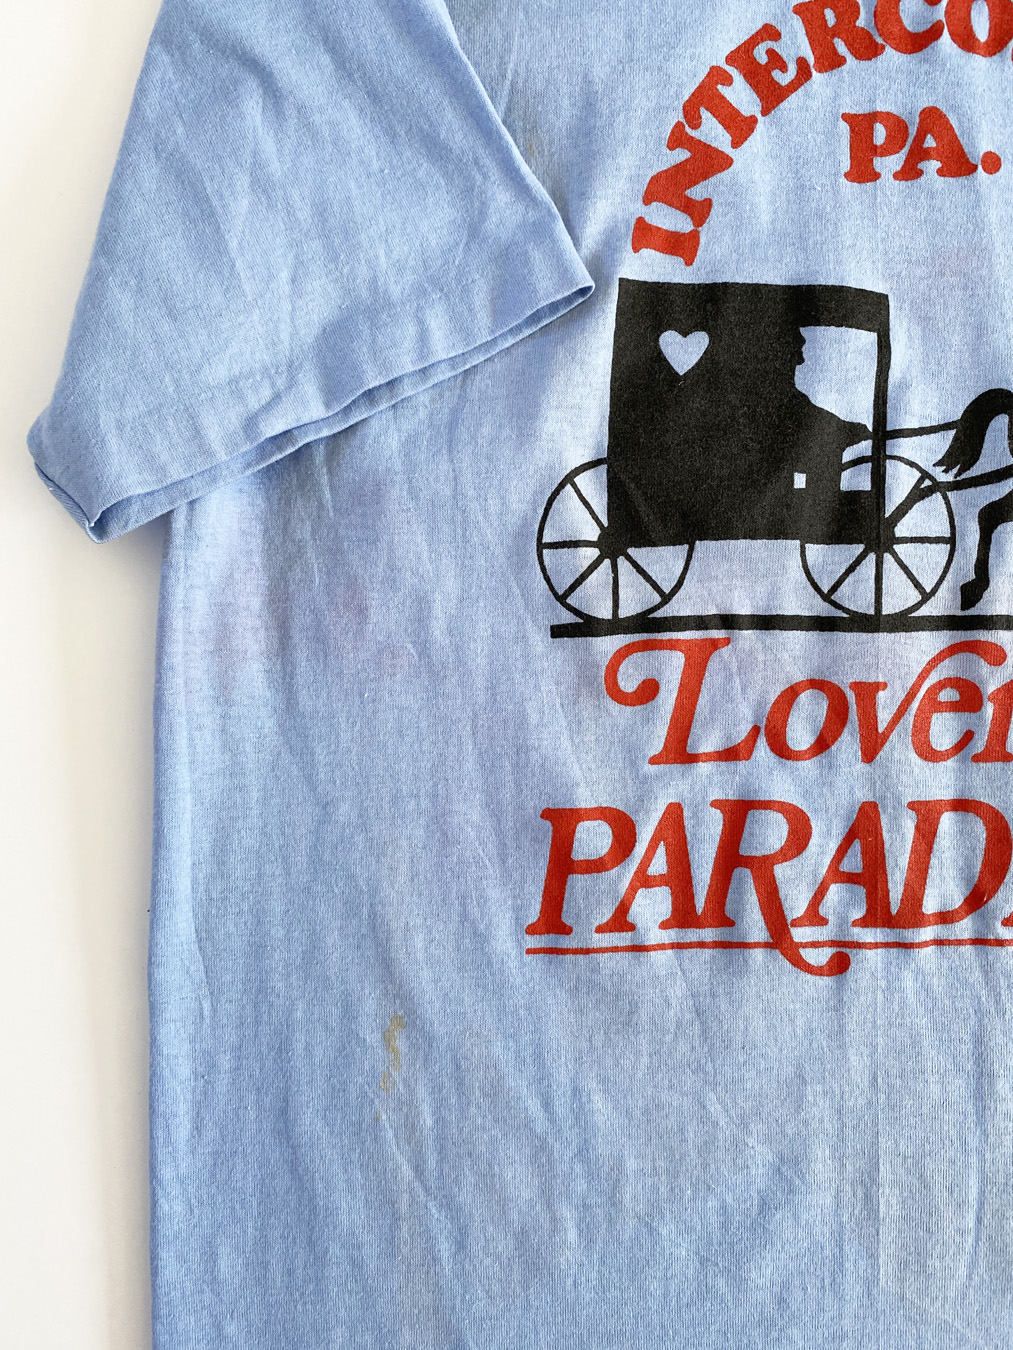 Vintage Intercourse, PA 'Lovers Paradise' Single Stitch T-Shirt